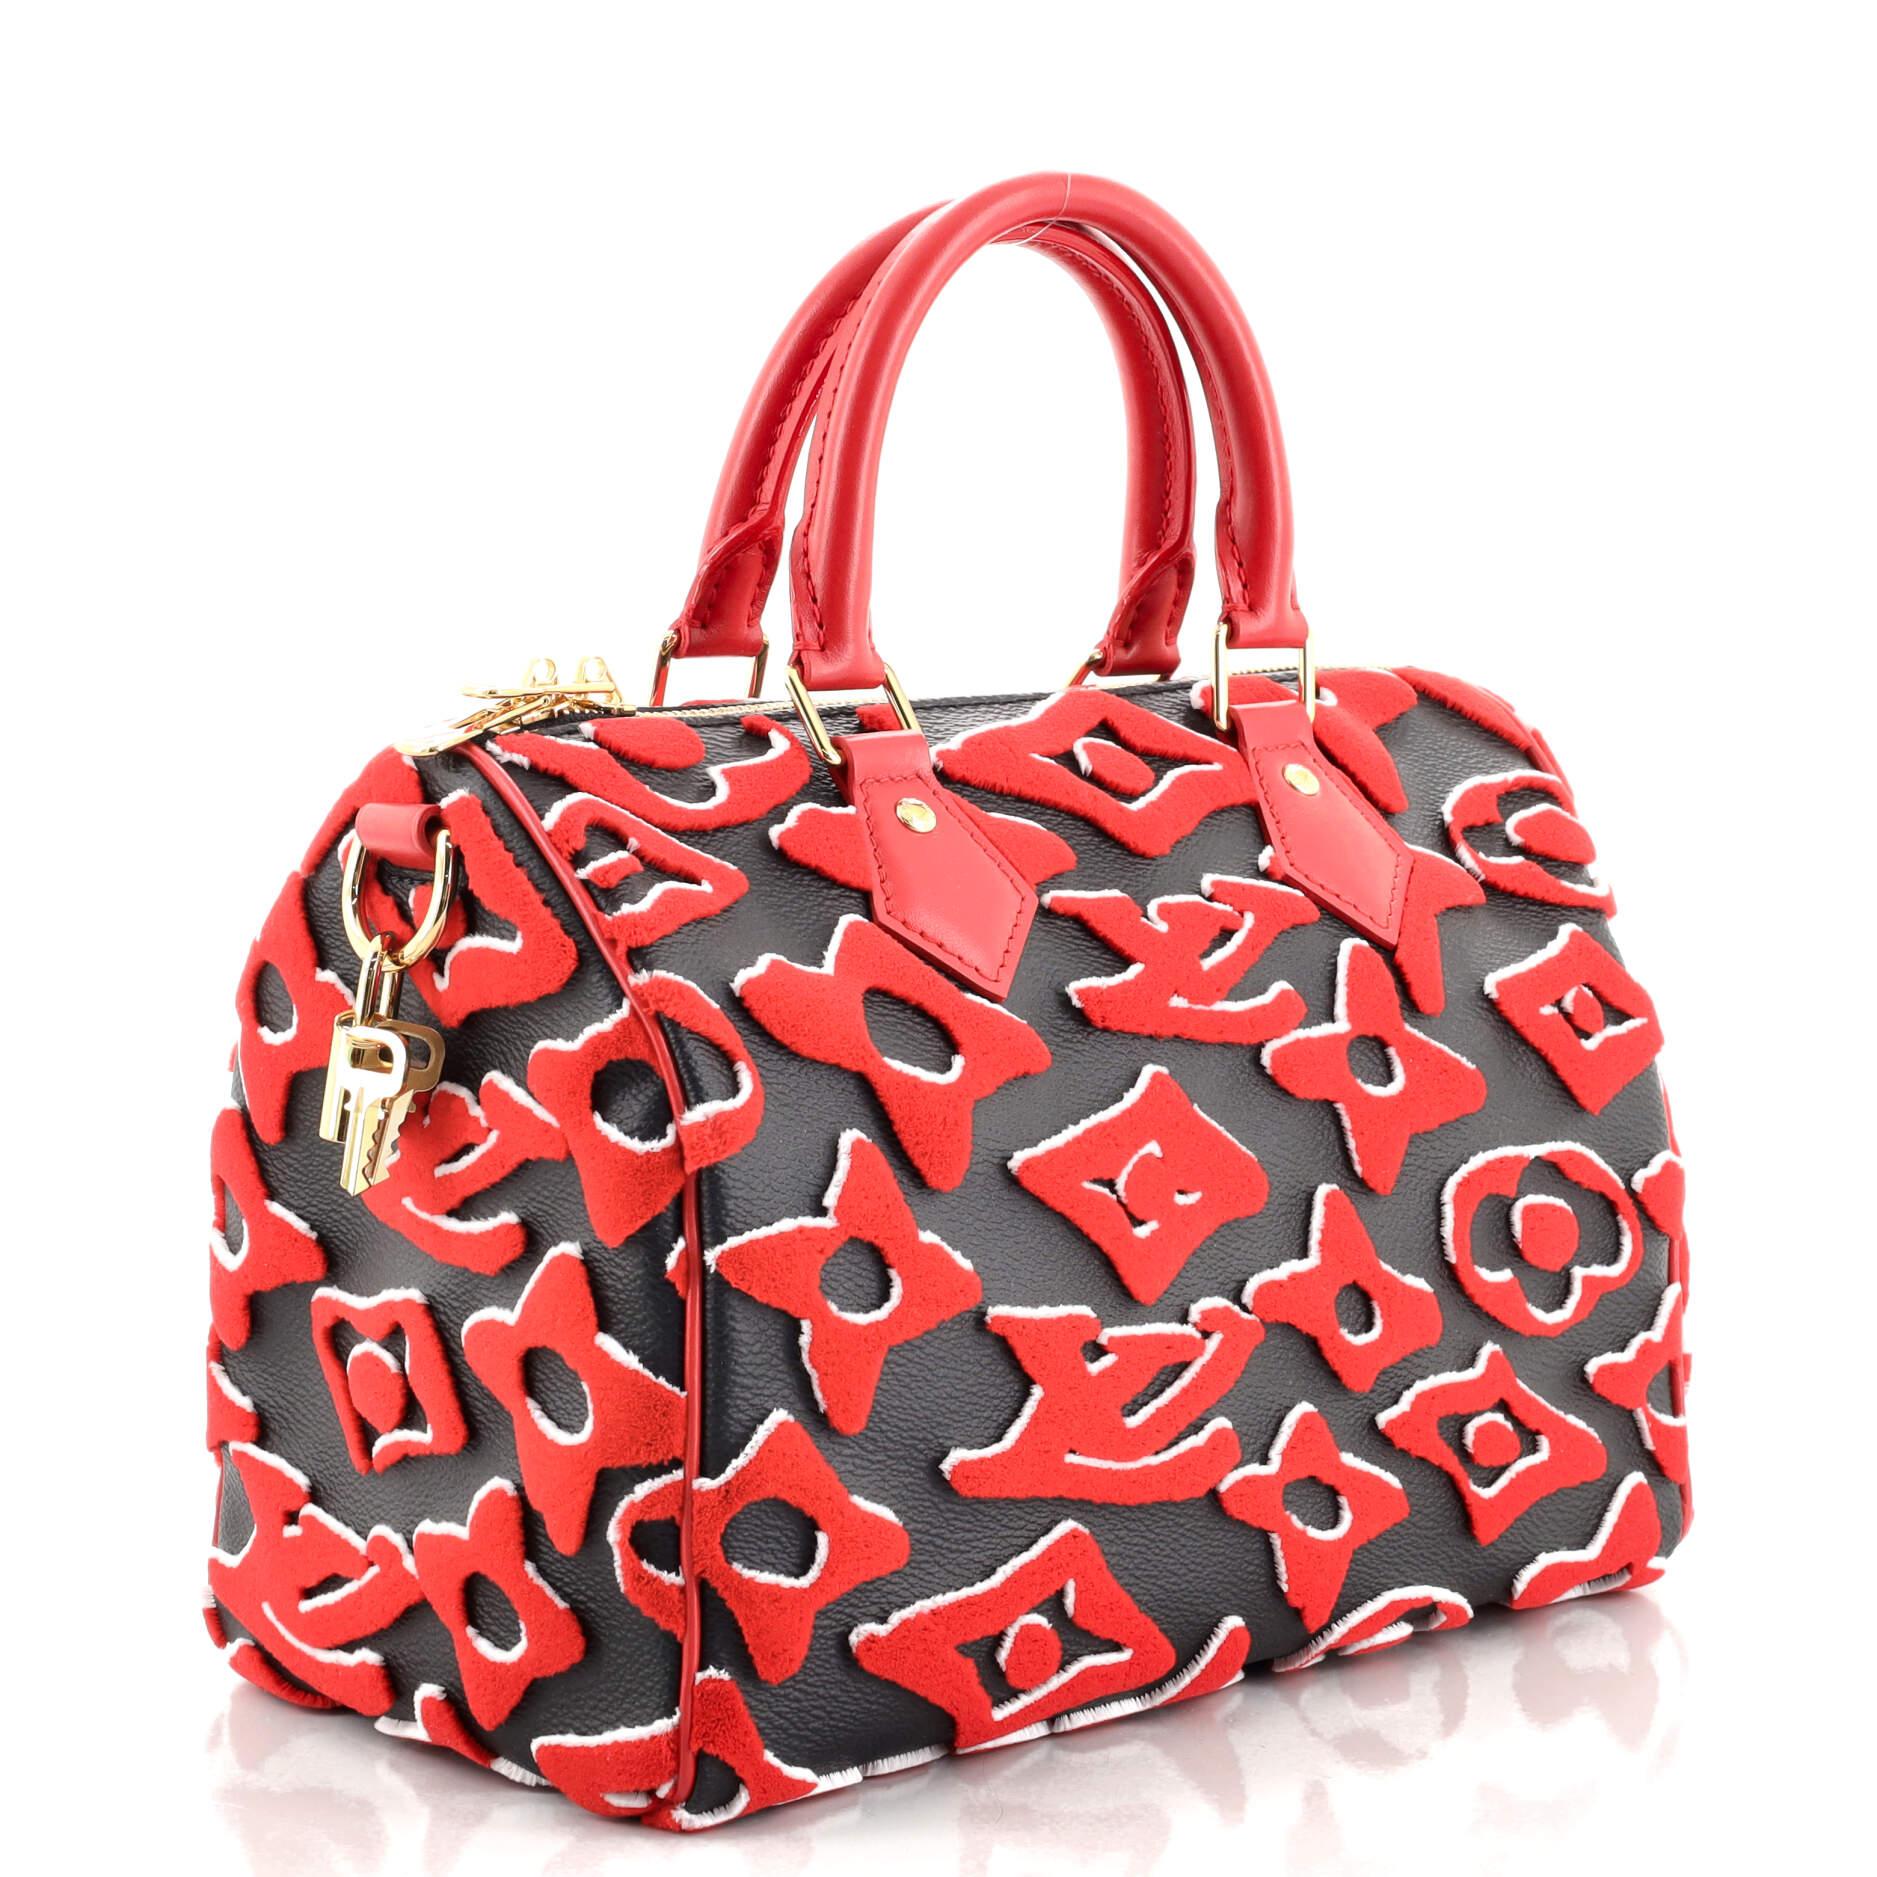 Red Louis Vuitton Speedy Bandouliere Bag Limited Edition Urs Fischer Tufted Monogram